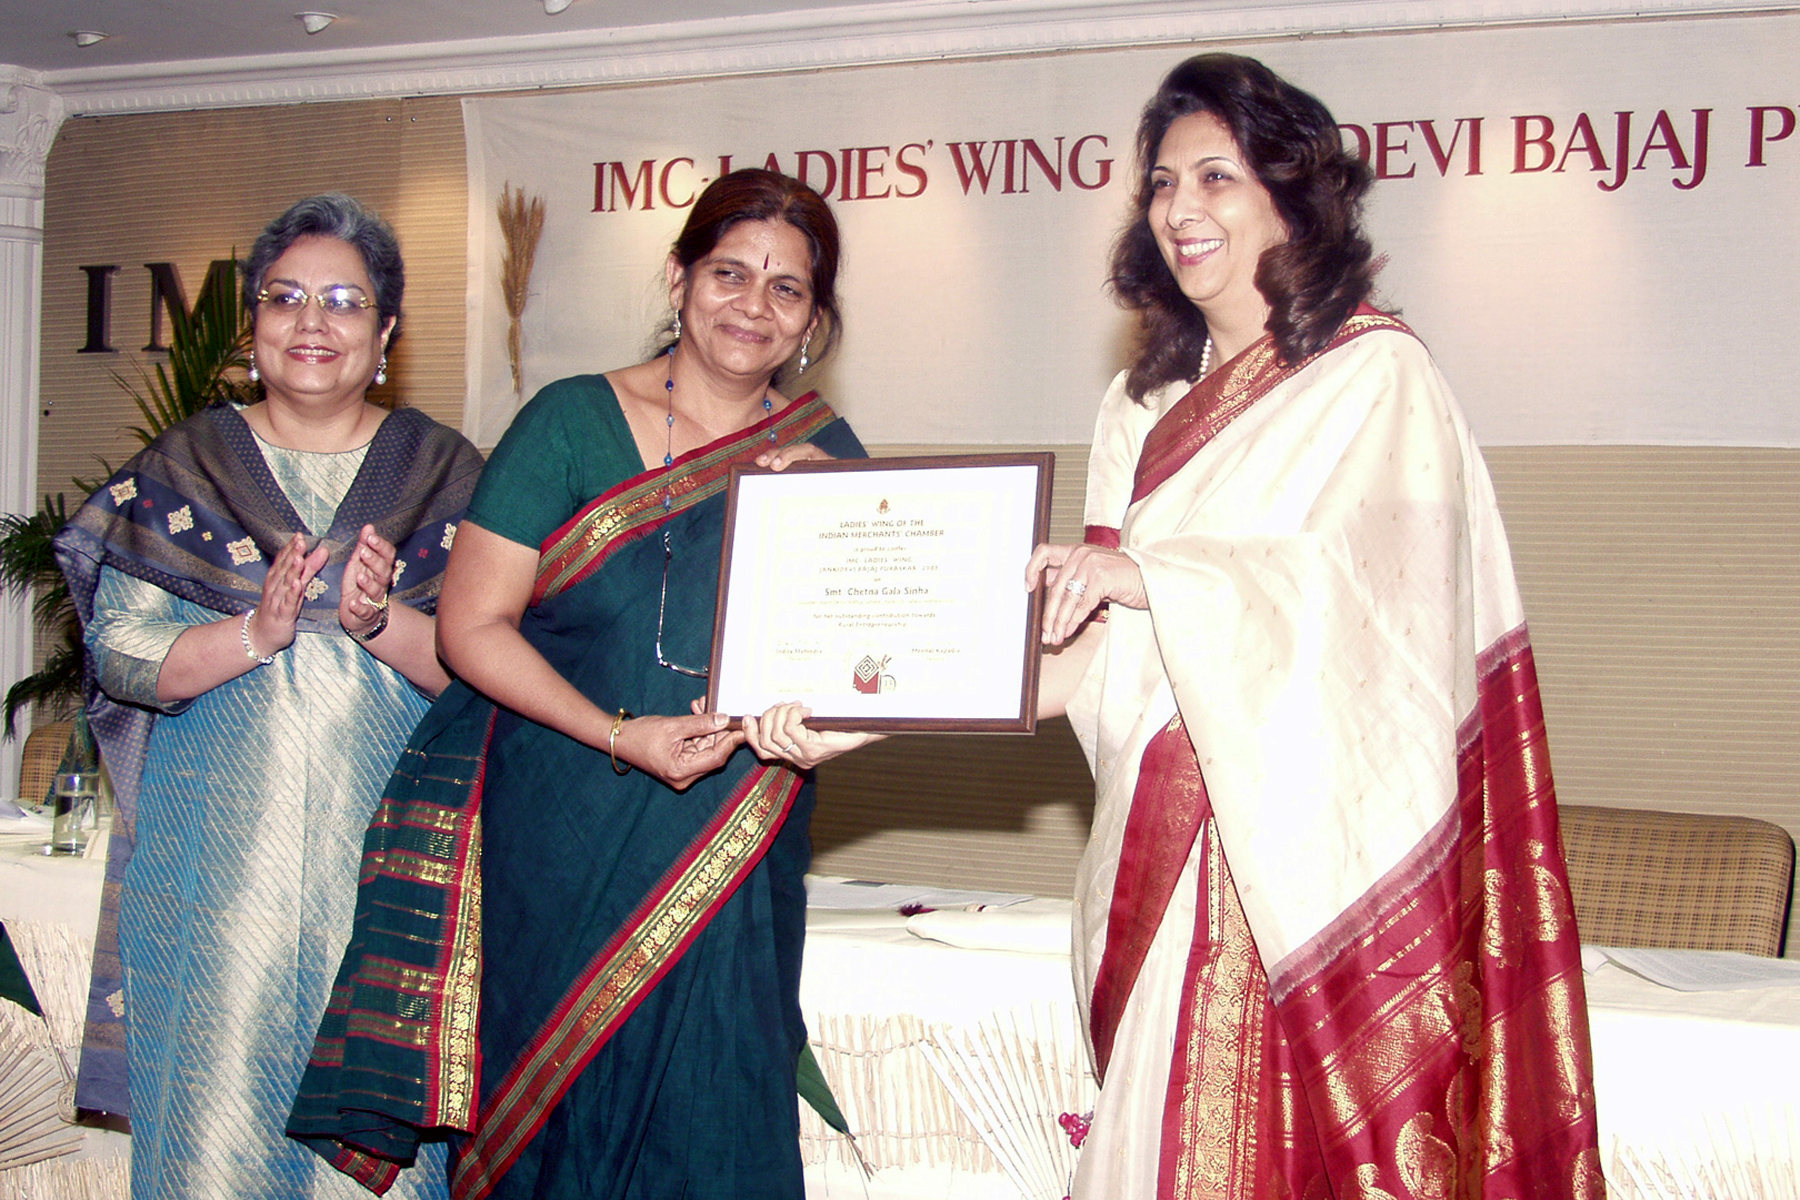 Smt. Chetna Gala Sinha receiving 13th IMC-LW Jankidevi Bajaj Puraskar -2005 from Dr. Indu Shahani, Principal, H.R.College. Dr. Meenal Kapadia, President IMC-LW looks on.